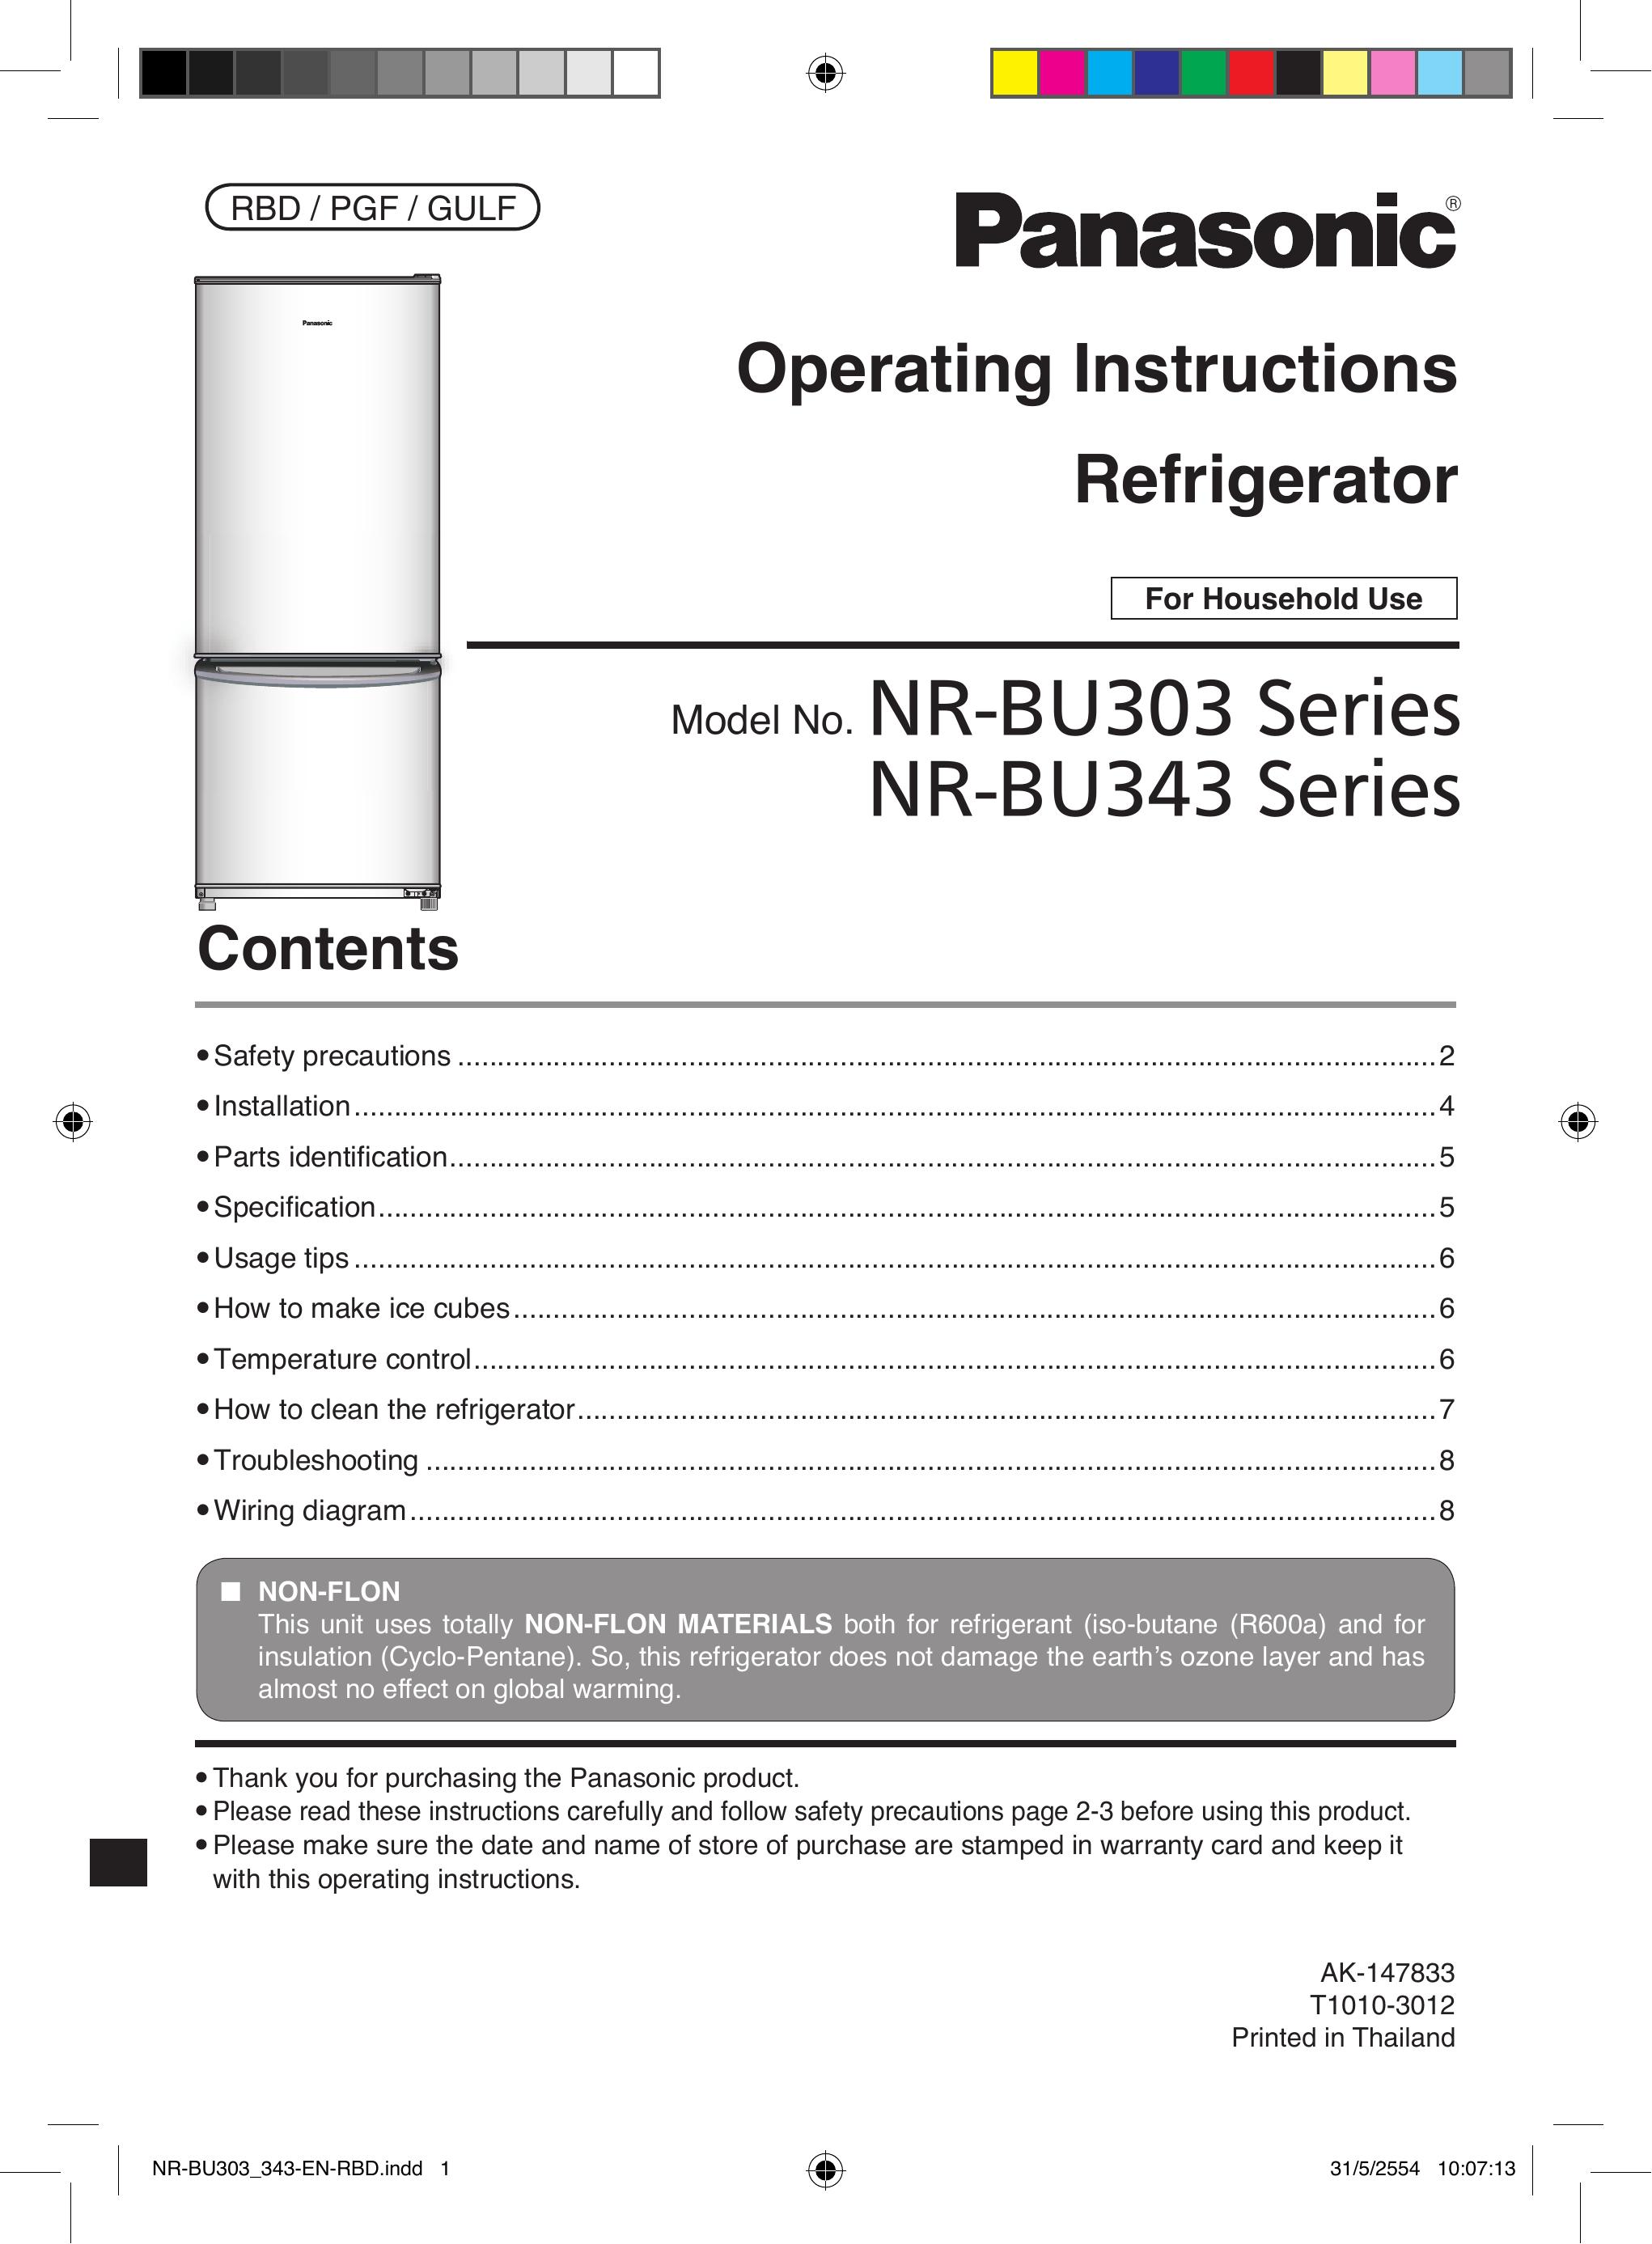 Panasonic NR-BU343 Refrigerator User Manual